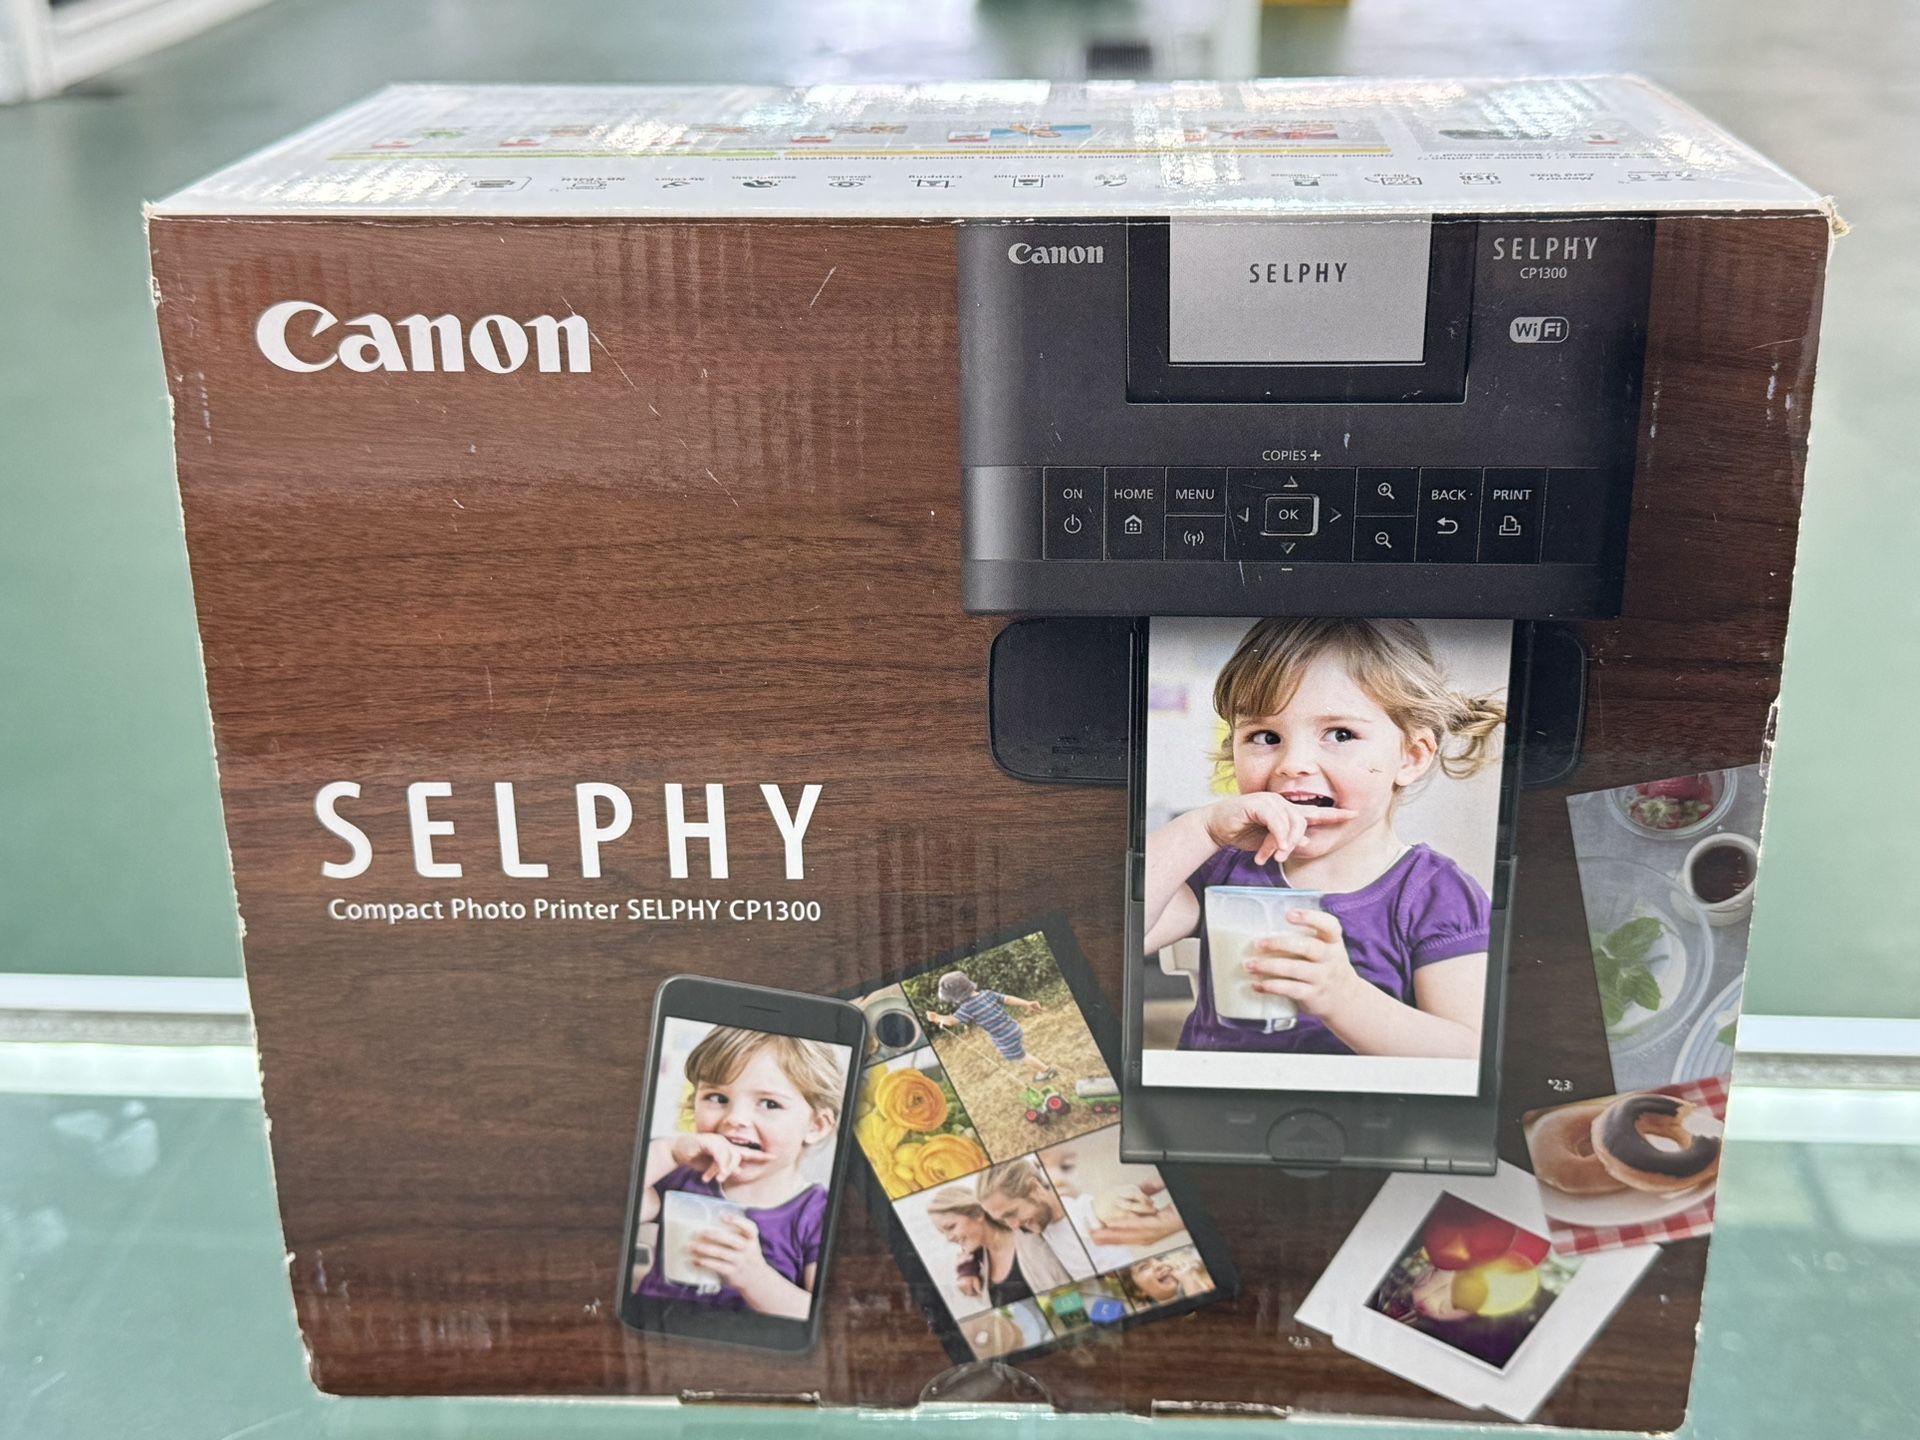 NEW! Canon Selphy CP1300 Compact Photo Printer